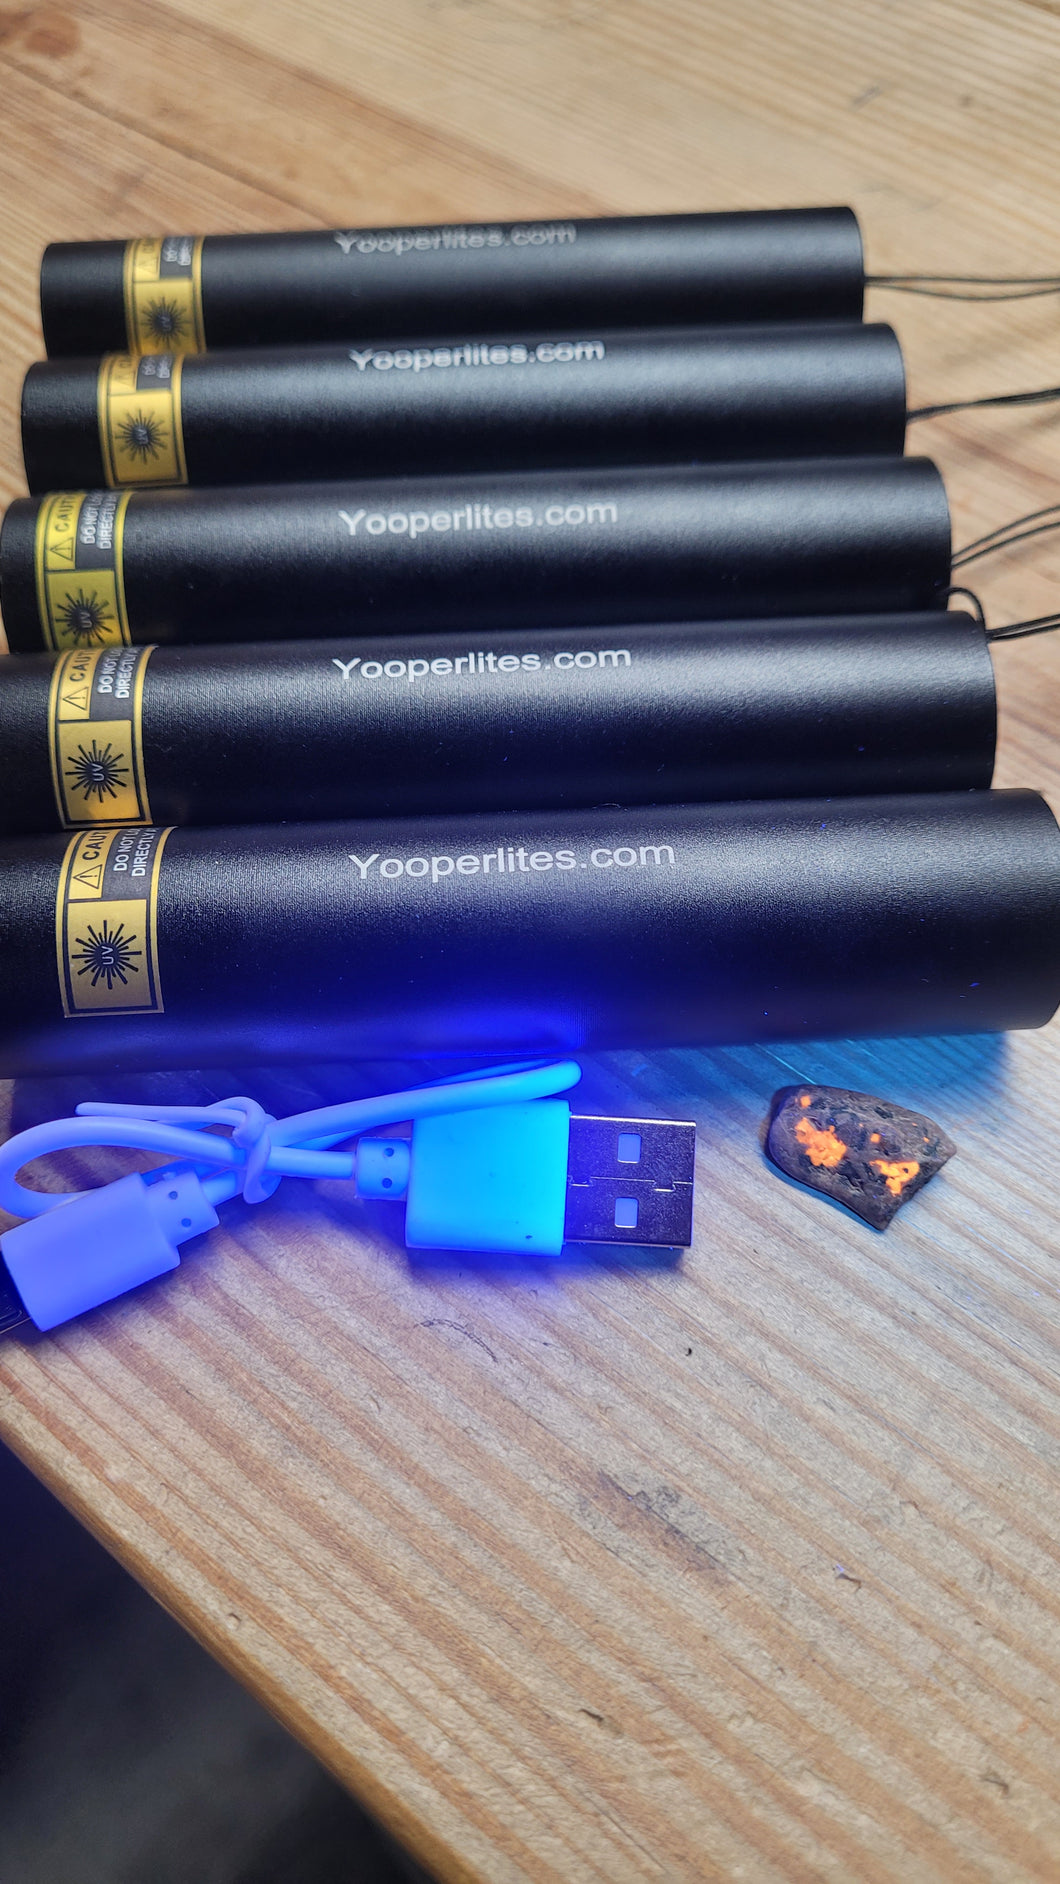 5-pack of Yooperlites Mini 3 watt 365nm UV flashlights